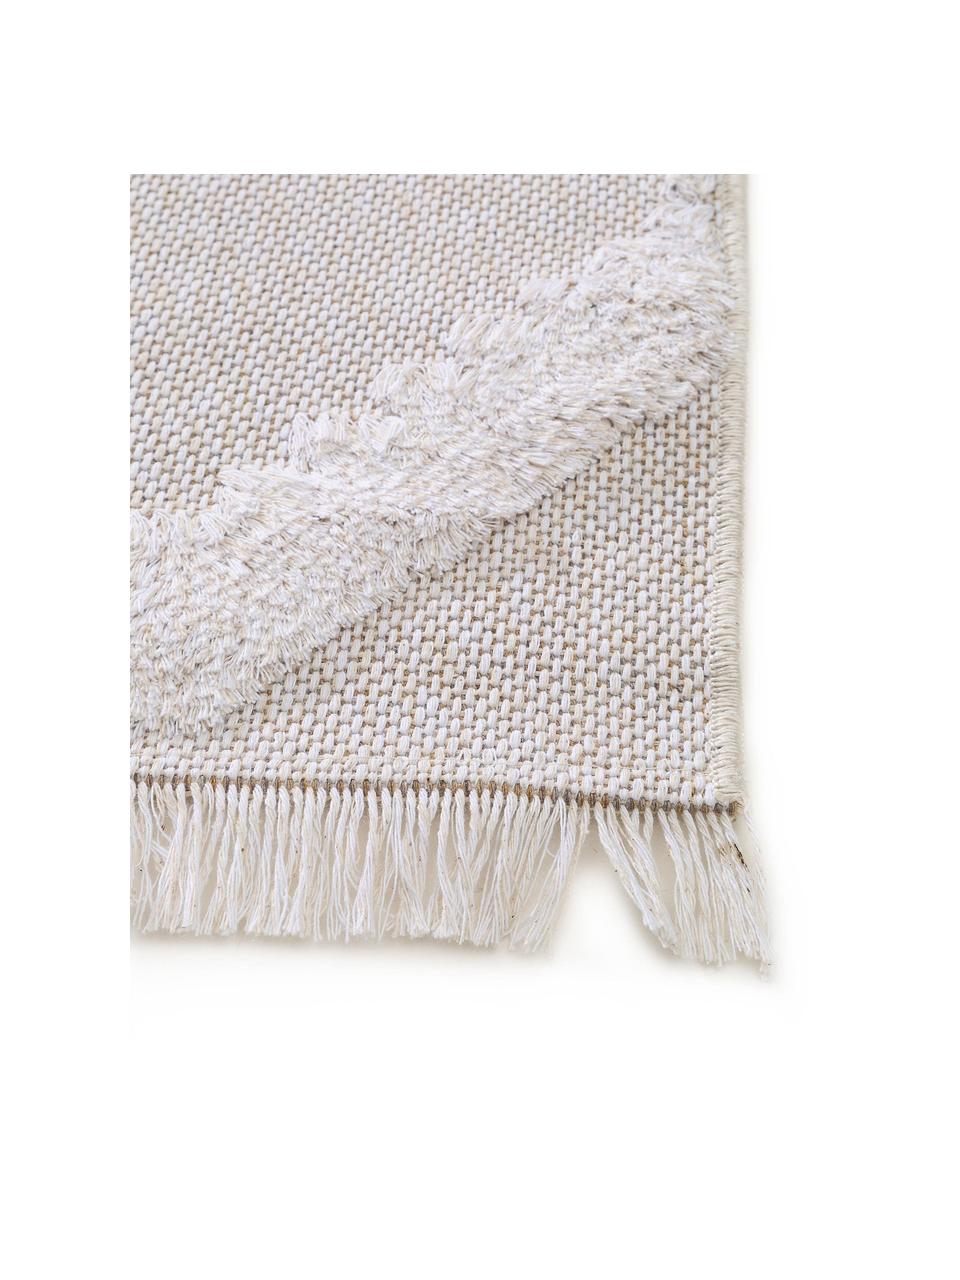 Alfombra lavable algodón texturizada Oslo, 100% algodón, Blanco crema, beige, An 190 x L 280 cm (Tamaño M)